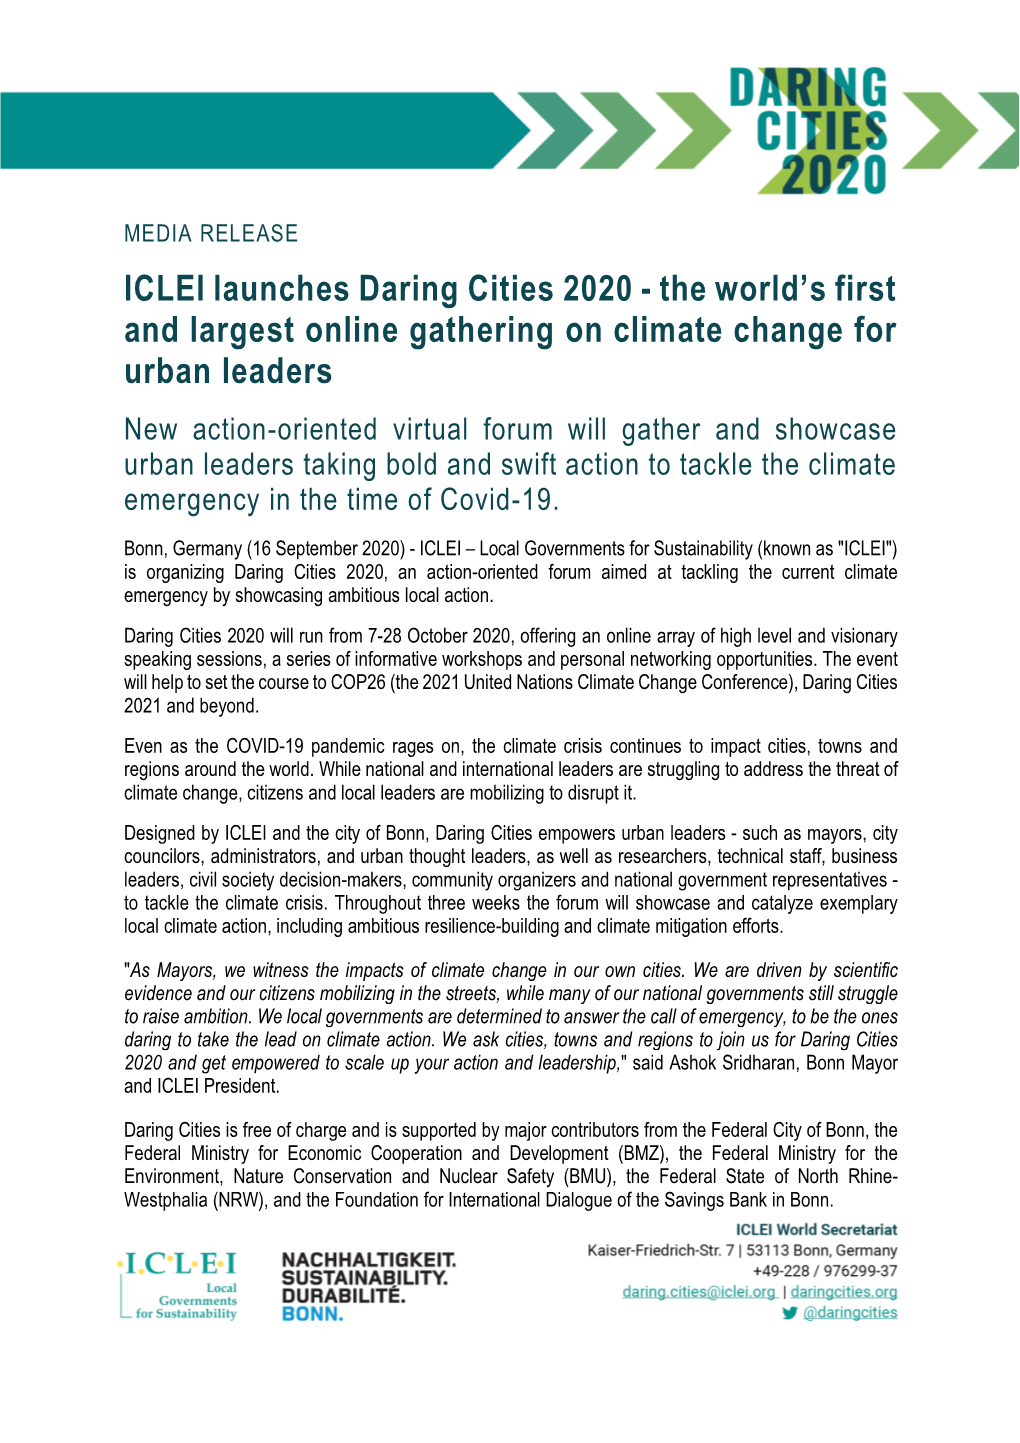 ICLEI Launches Daring Cities 2020